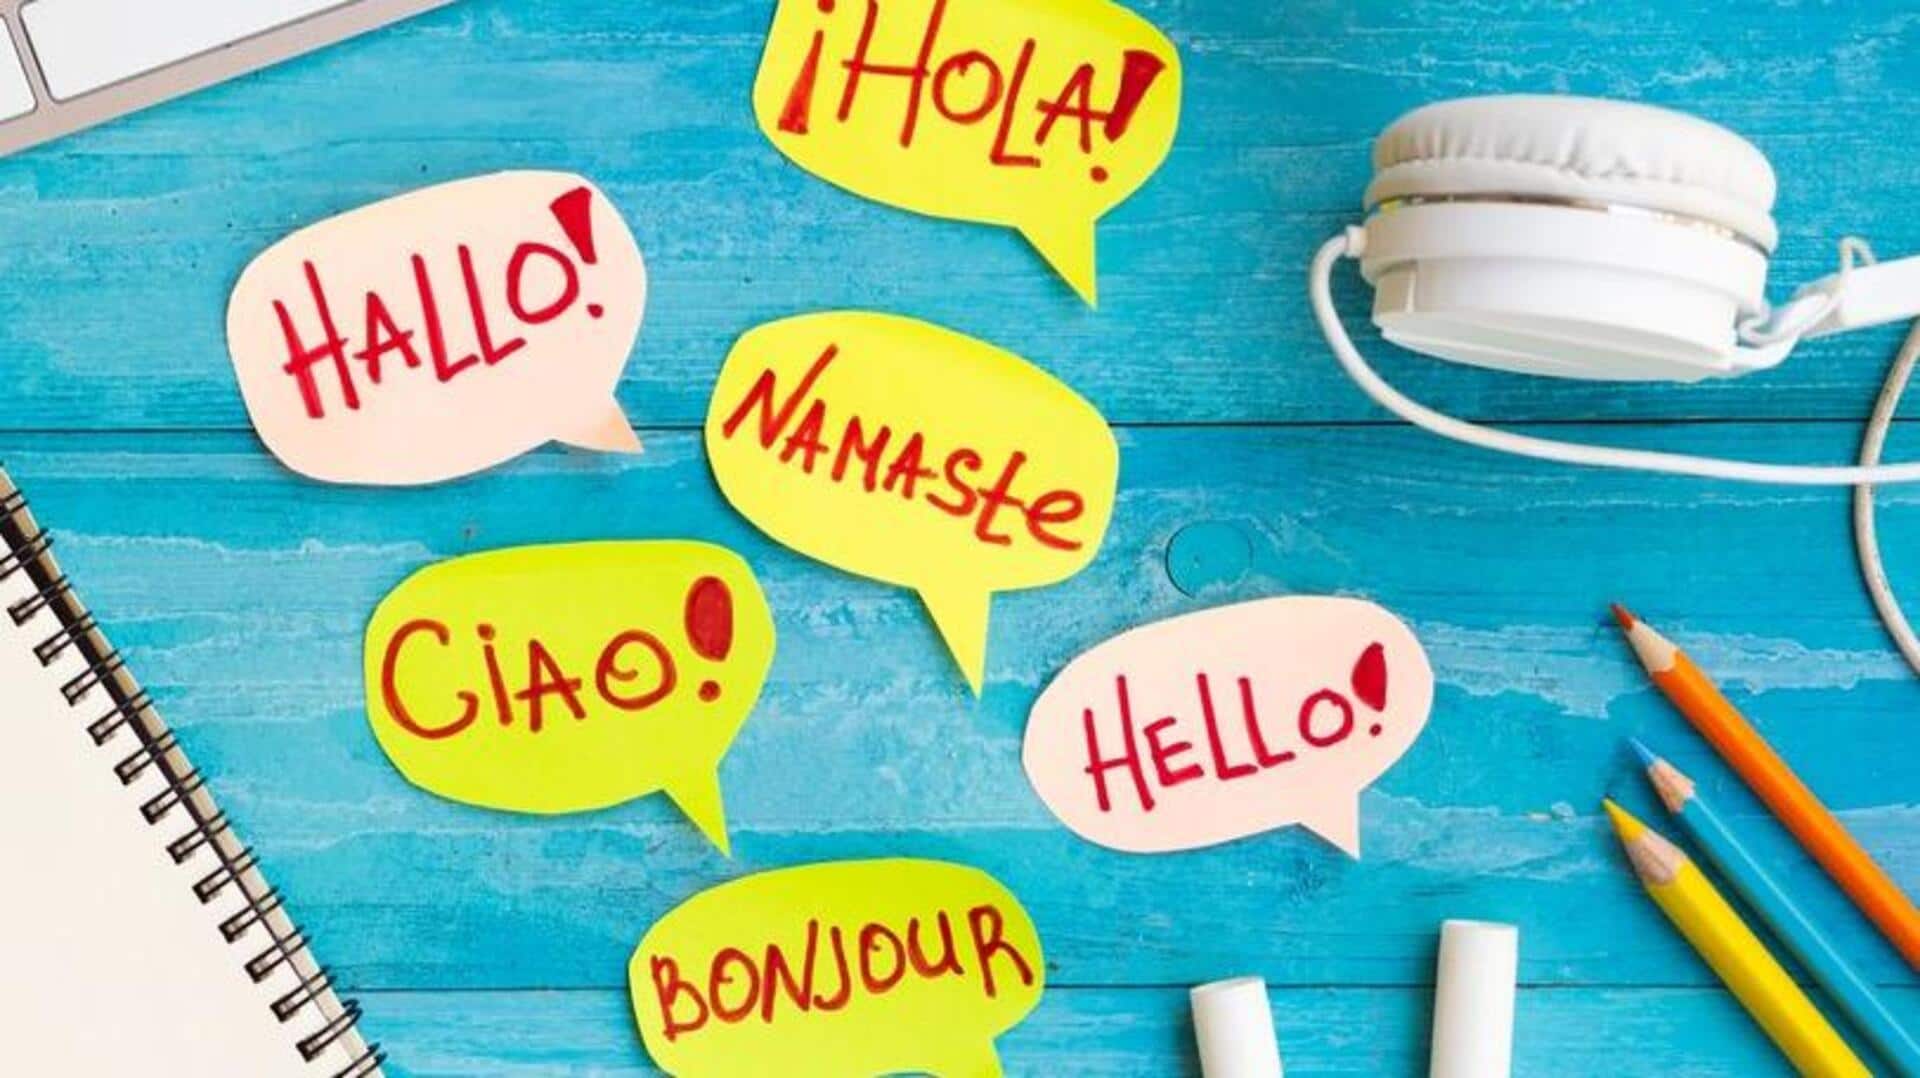 Tips to master languages with Duolingo